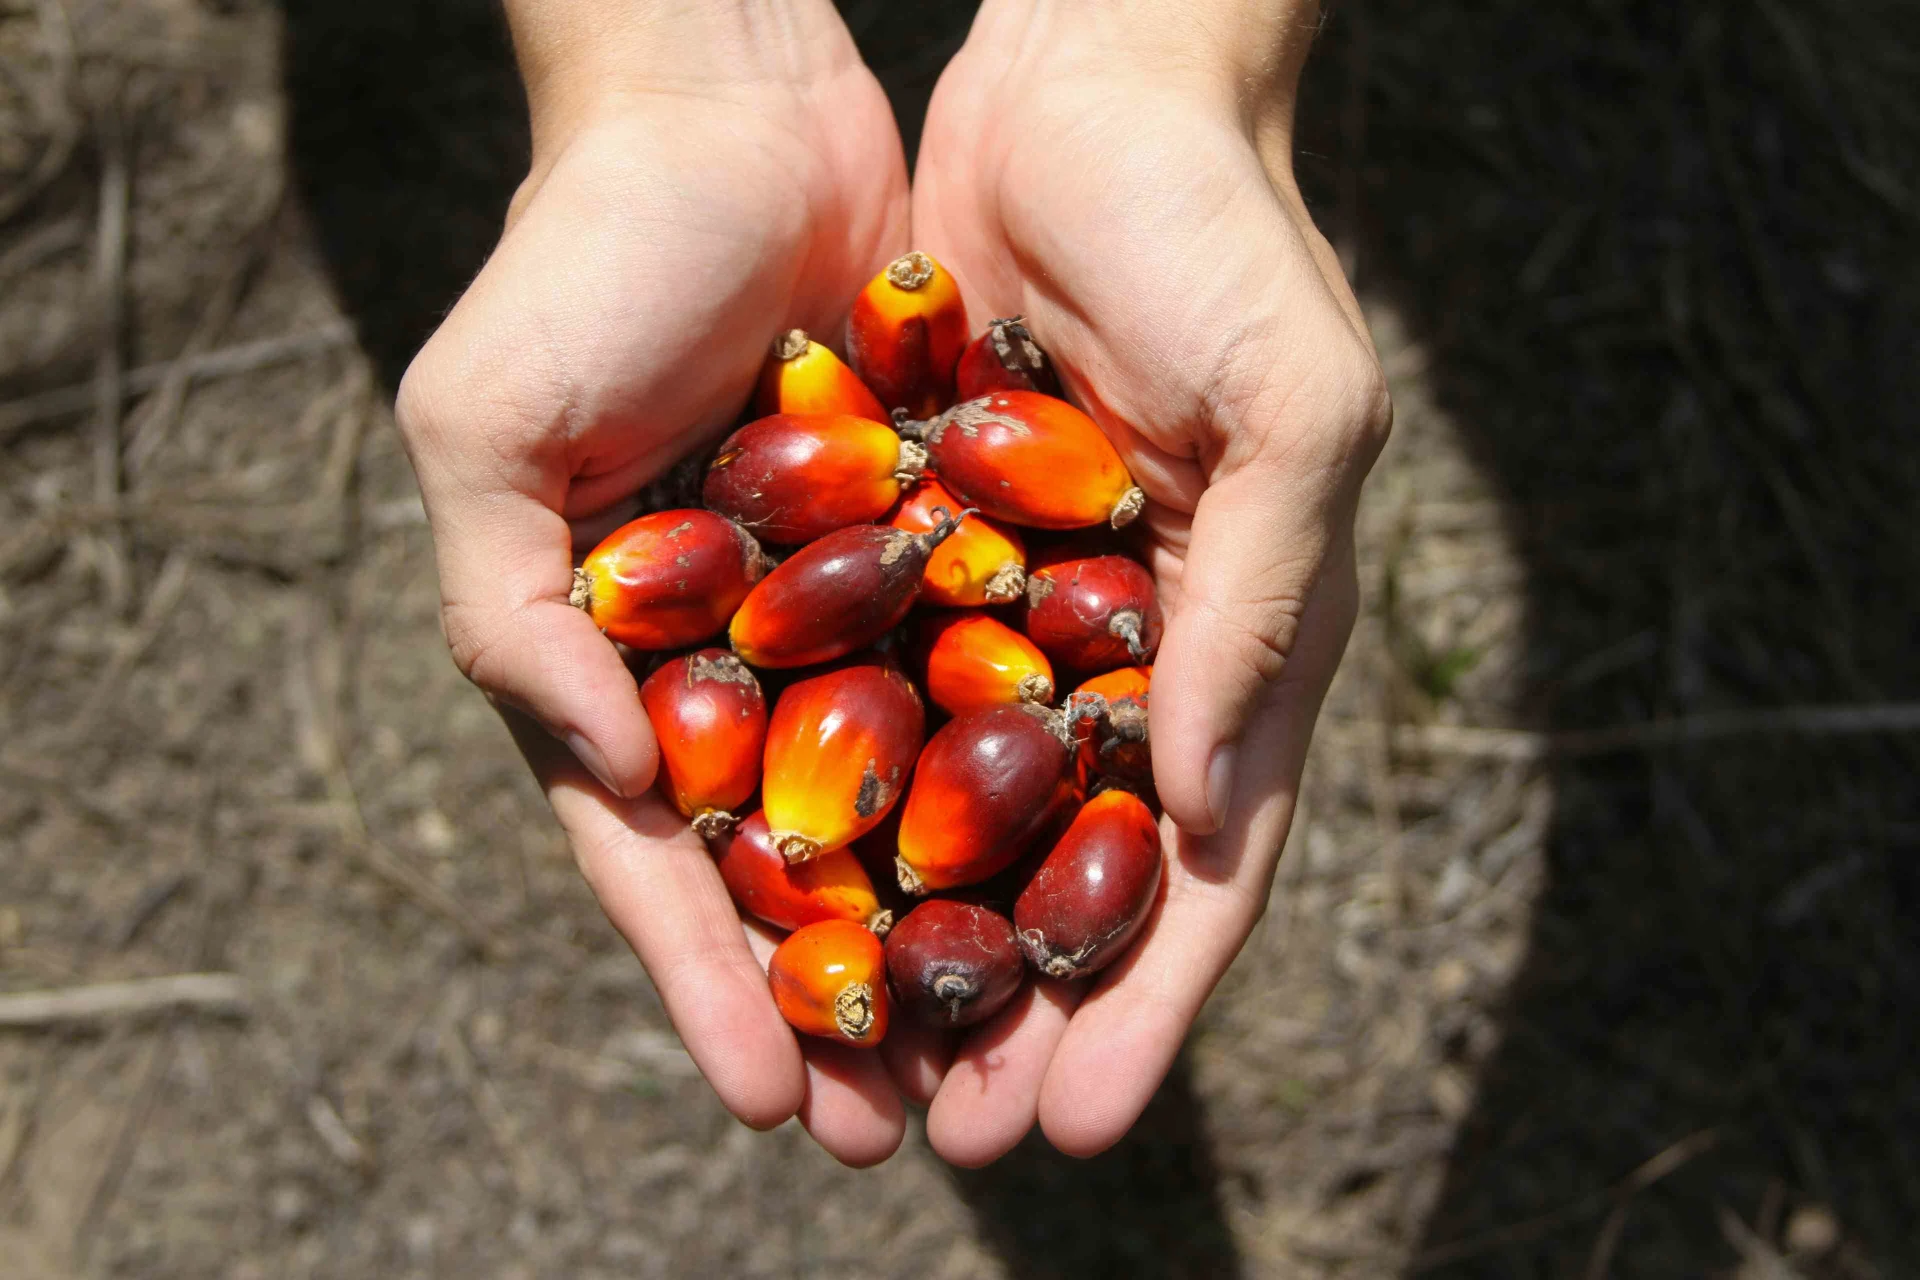 Palm oil palm fruits